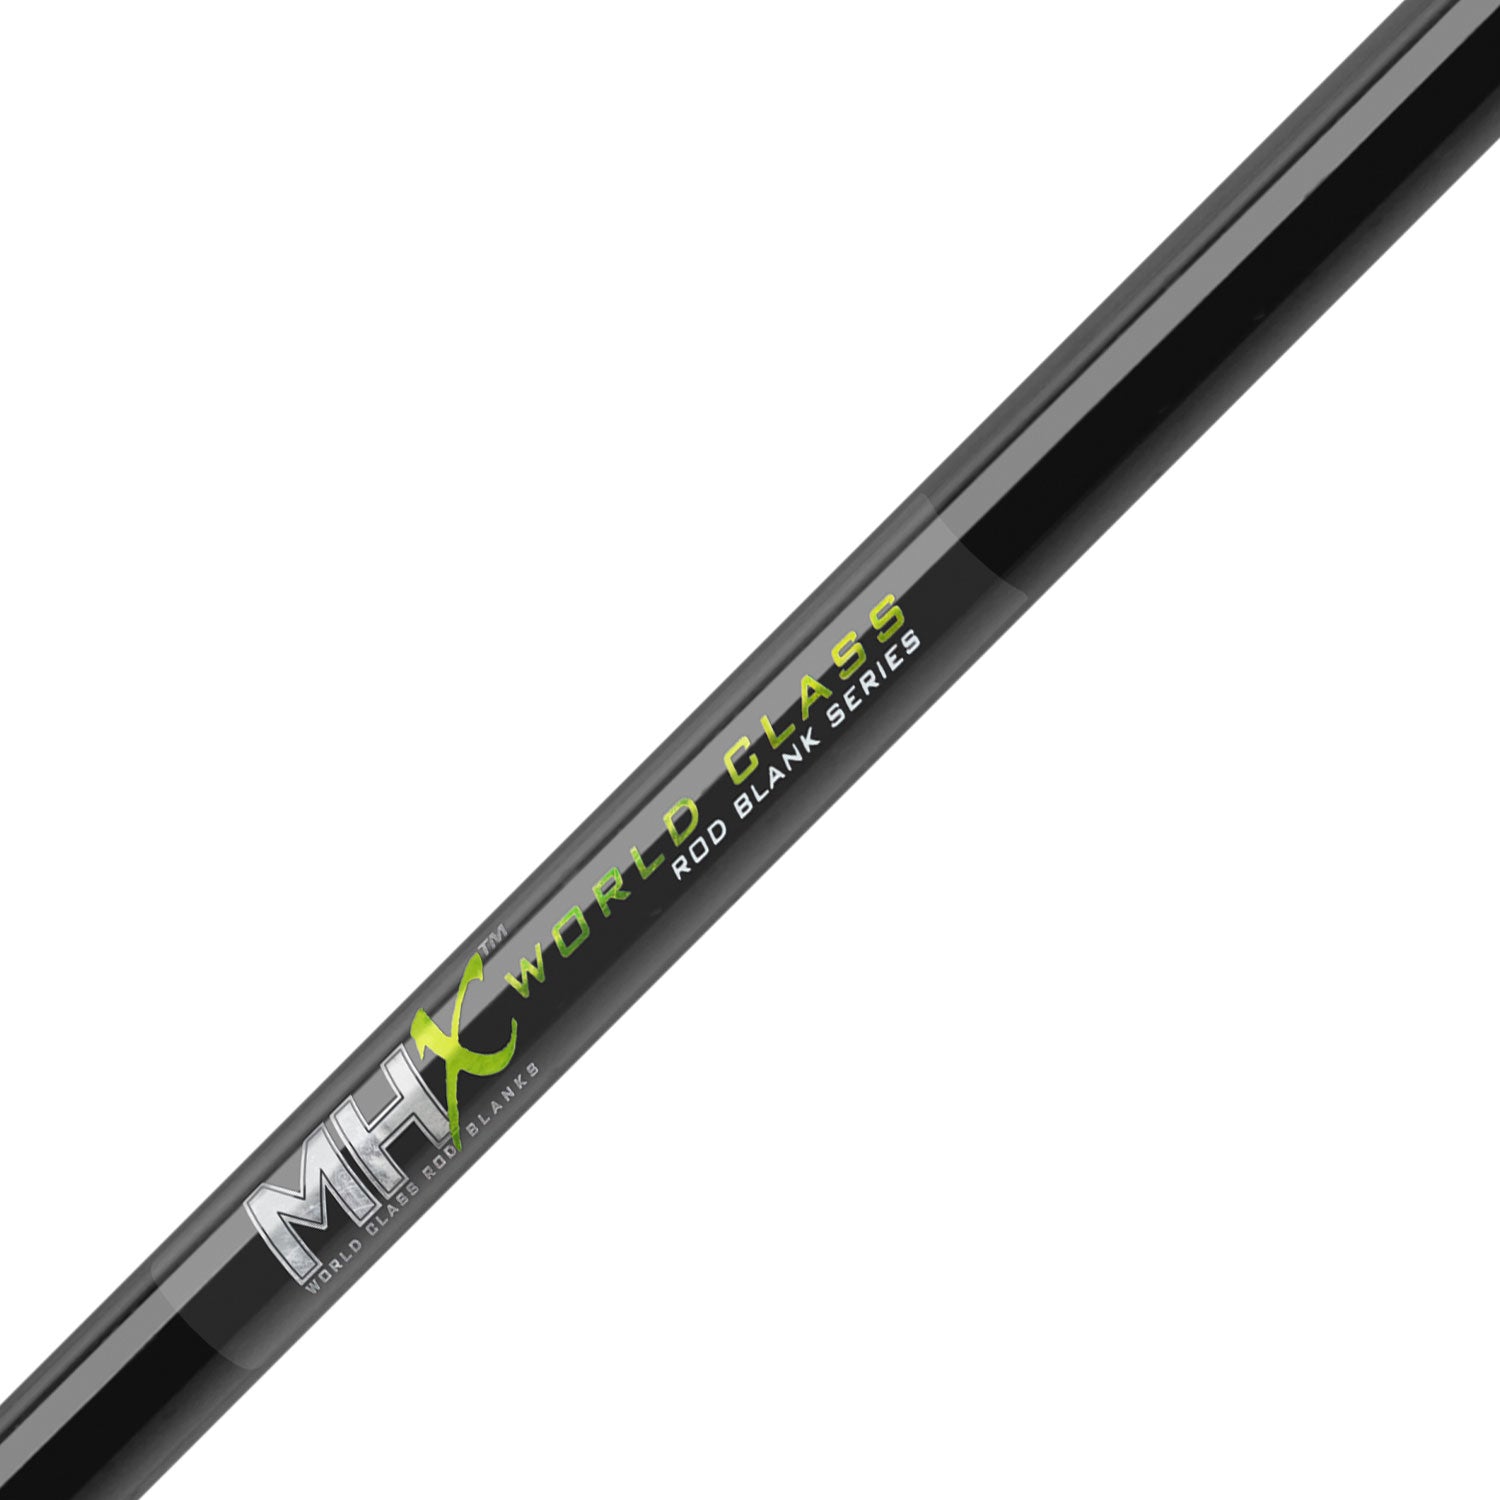 MHX 9'0" X-Heavy Fast Action Musky & Saltwater Rod Blank - MU108XHF-MHX